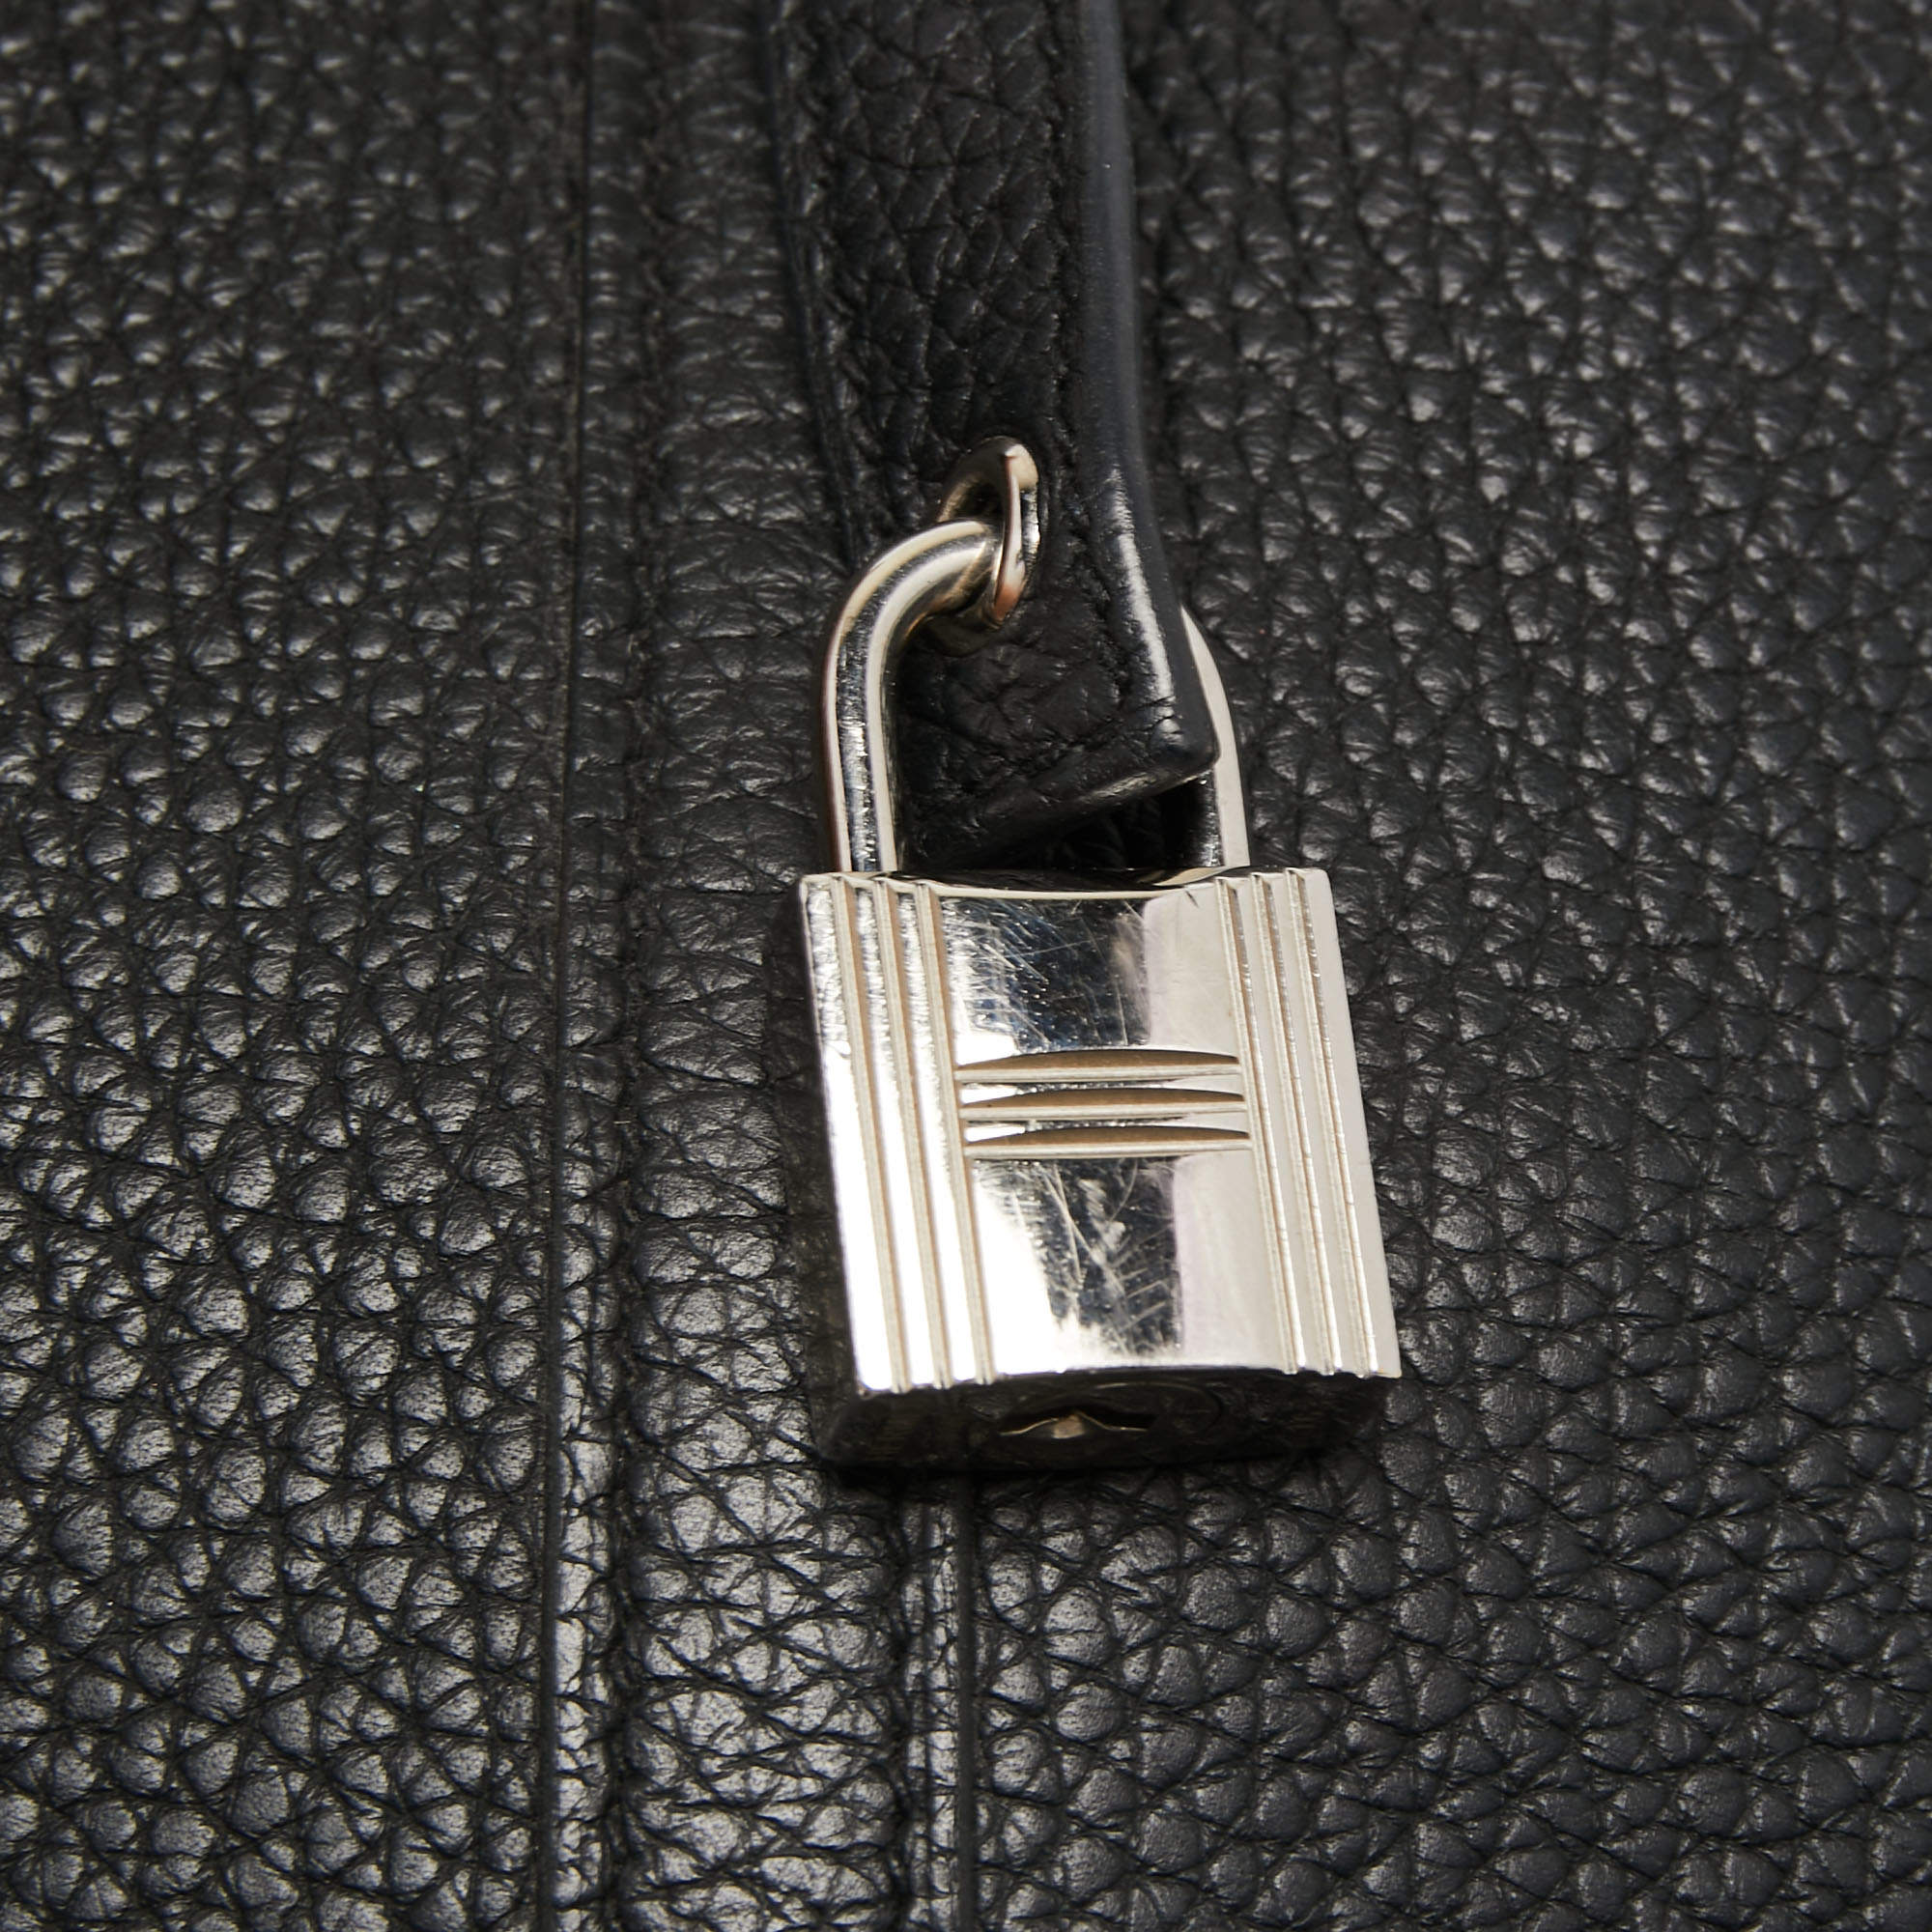 Hermès Black Togo Leather Picotin Lock 18 Bag Hermes